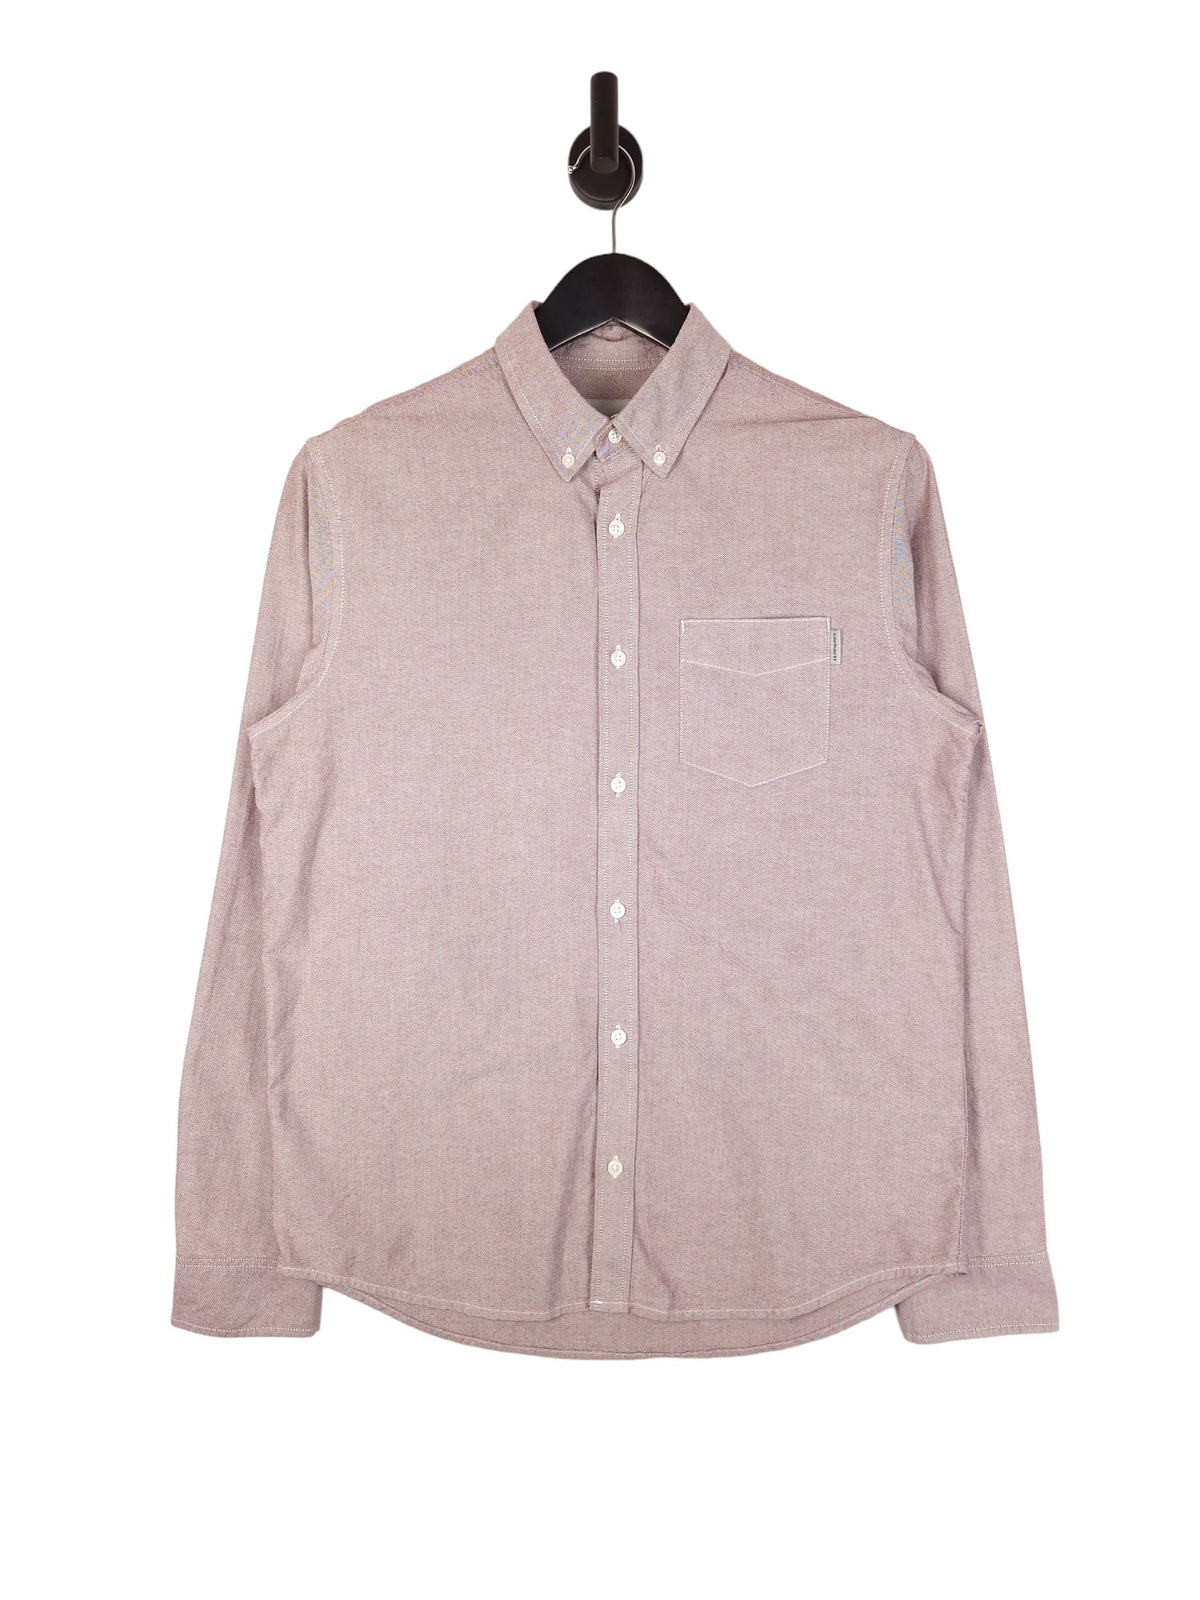 Carhartt Long Sleeve Shirt - Size Medium